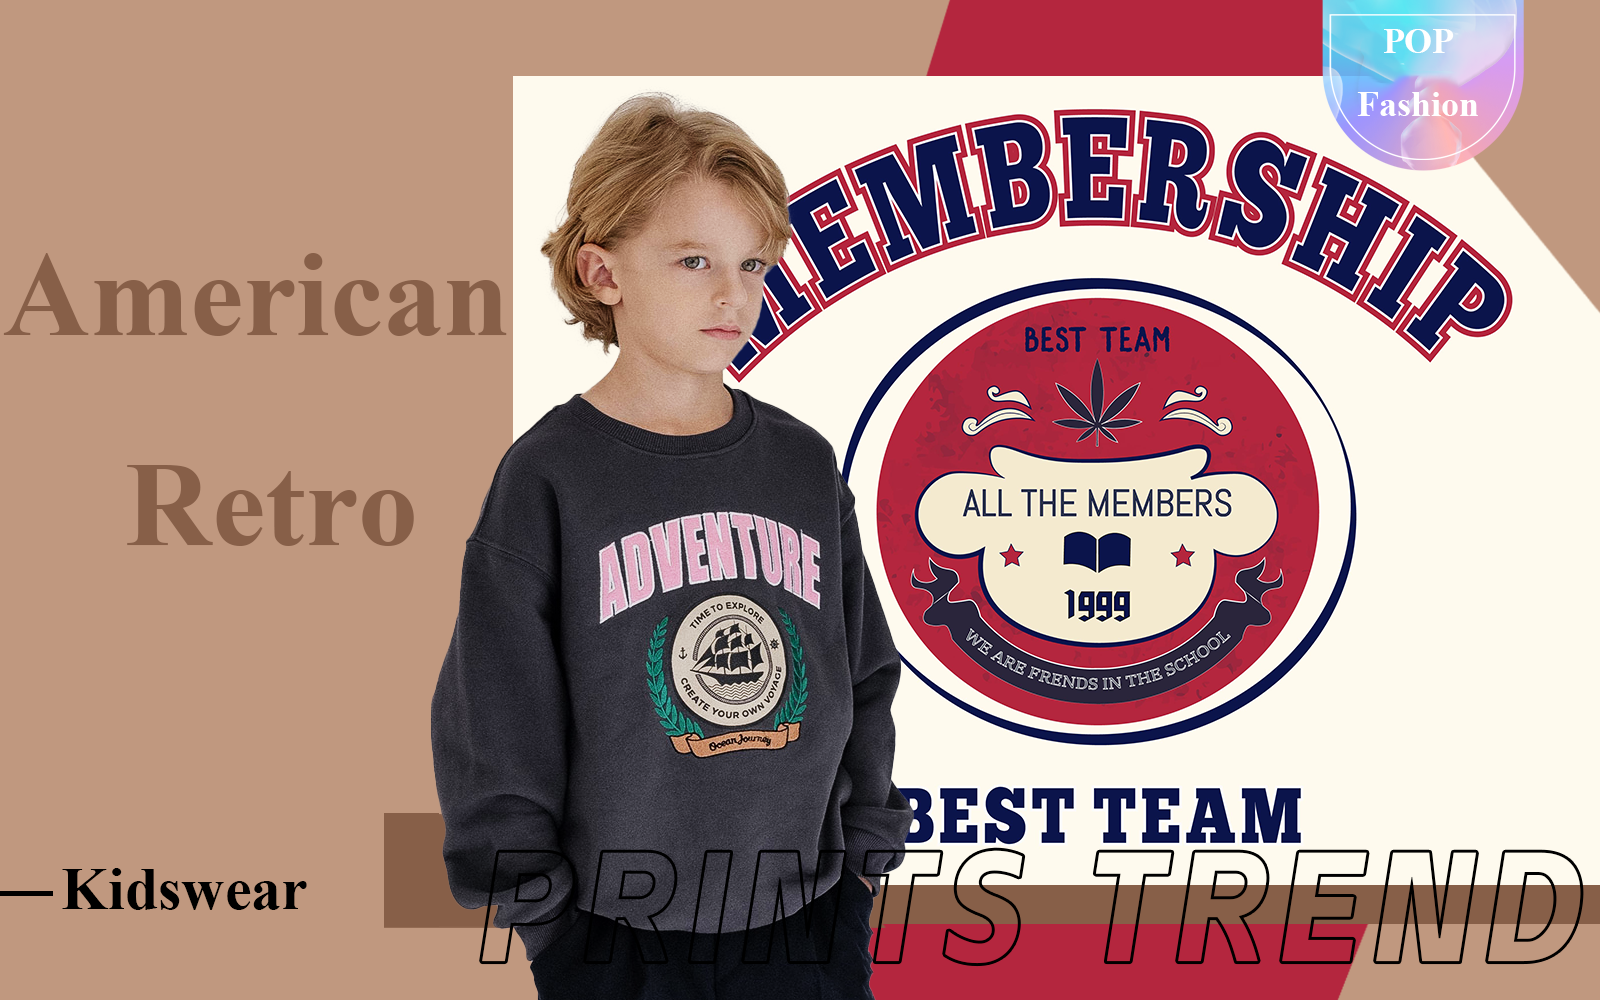 American Retro -- The Pattern Trend for Kidswear